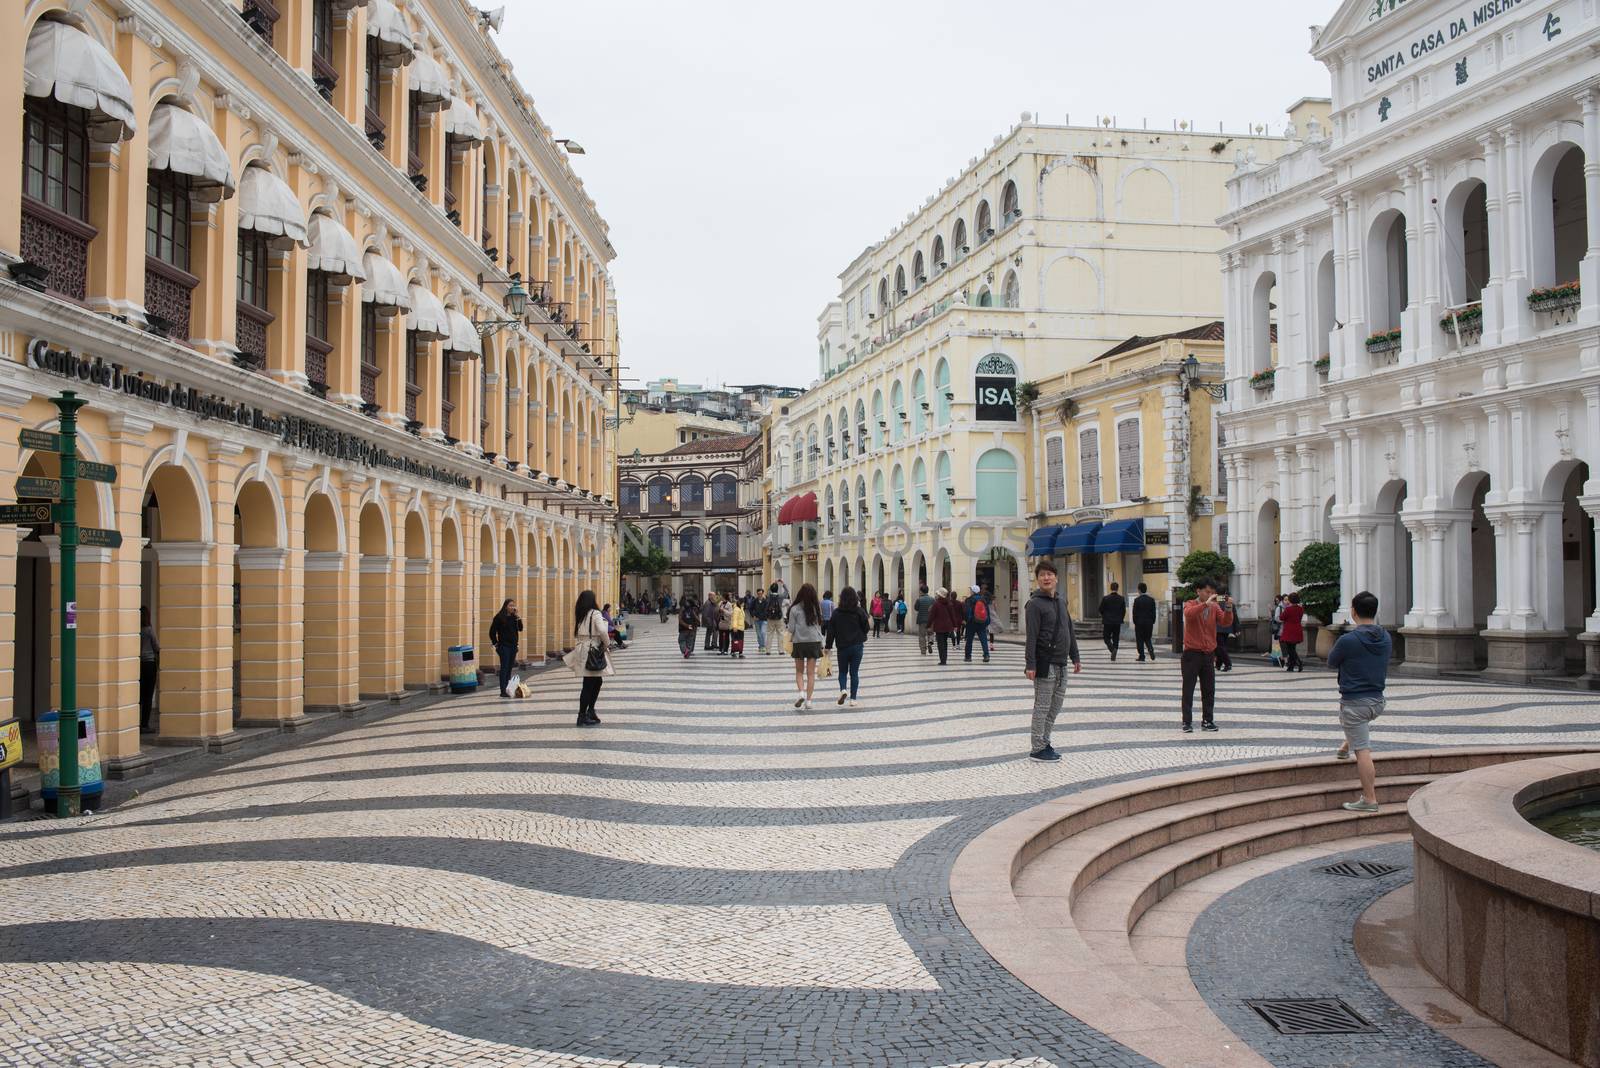 Senado Square - The Historic Centre of Macau was inscribed on the UNESCO World Heritage List in 2005. by MCVSN